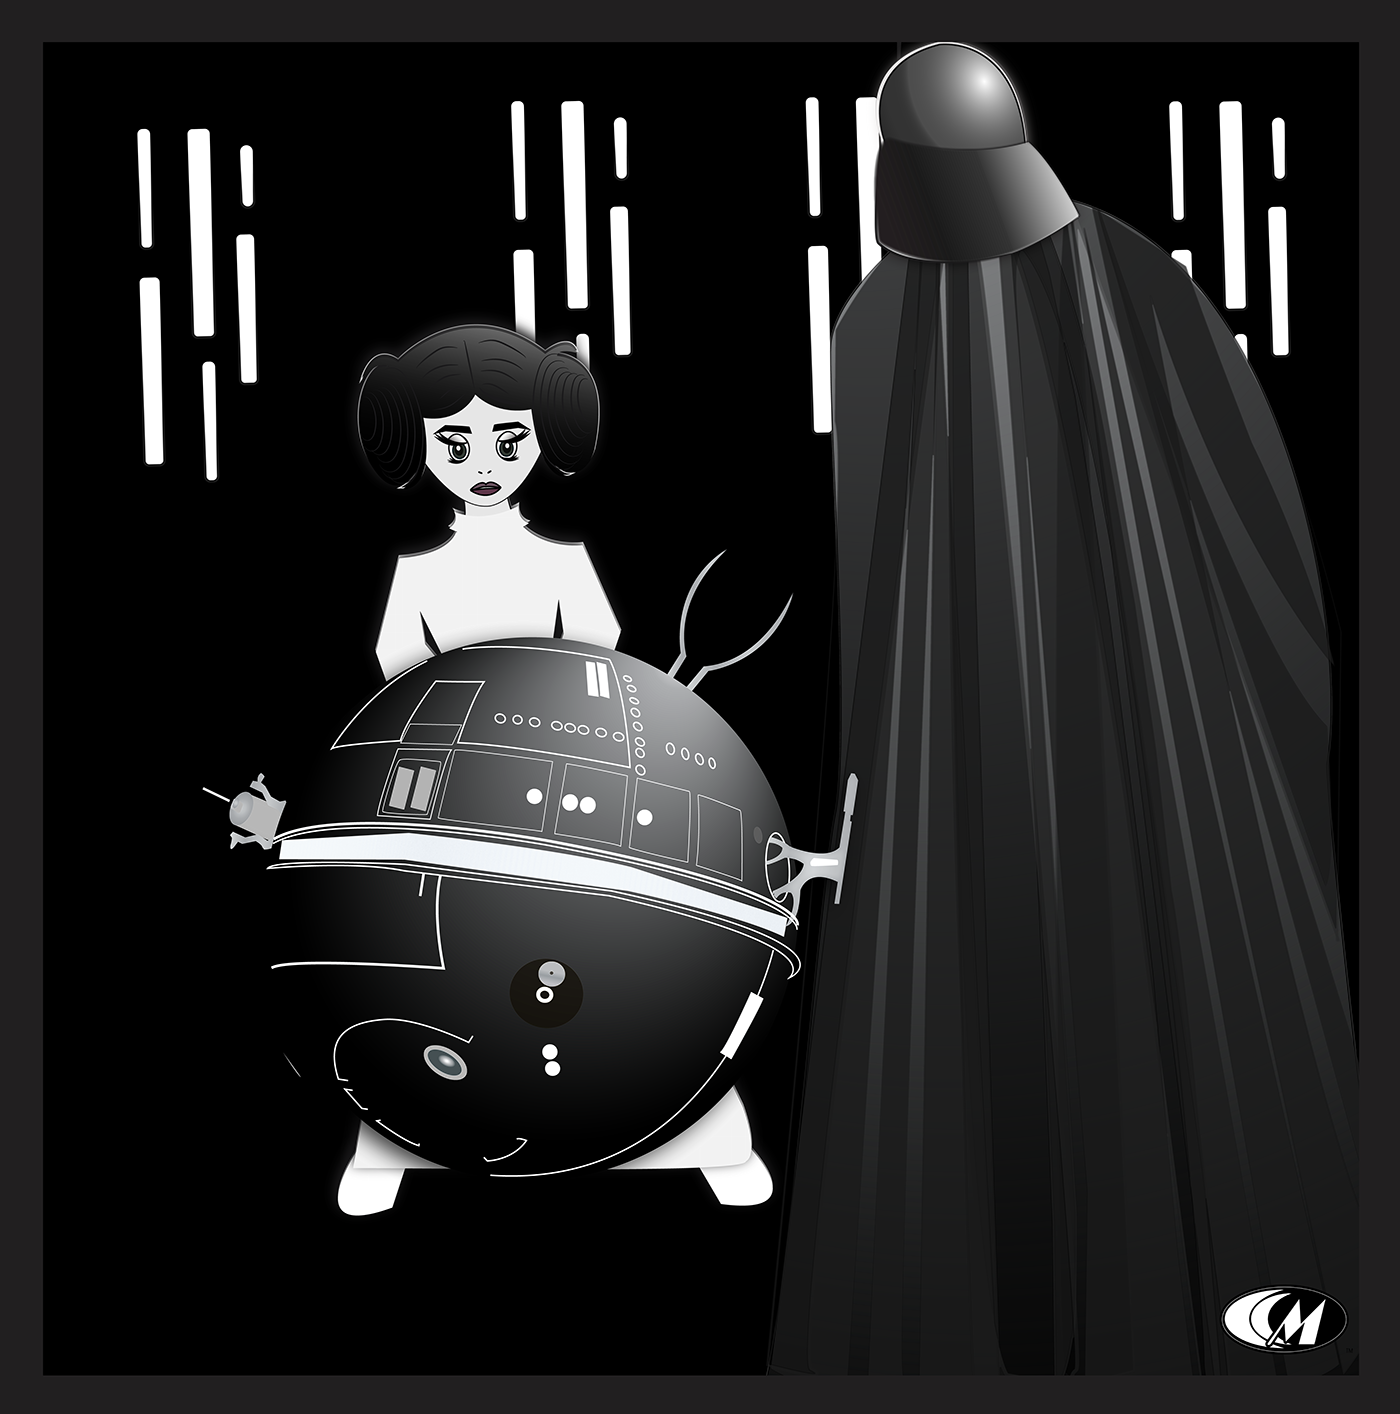 minimalist vector Space  star wars Princess Leia series